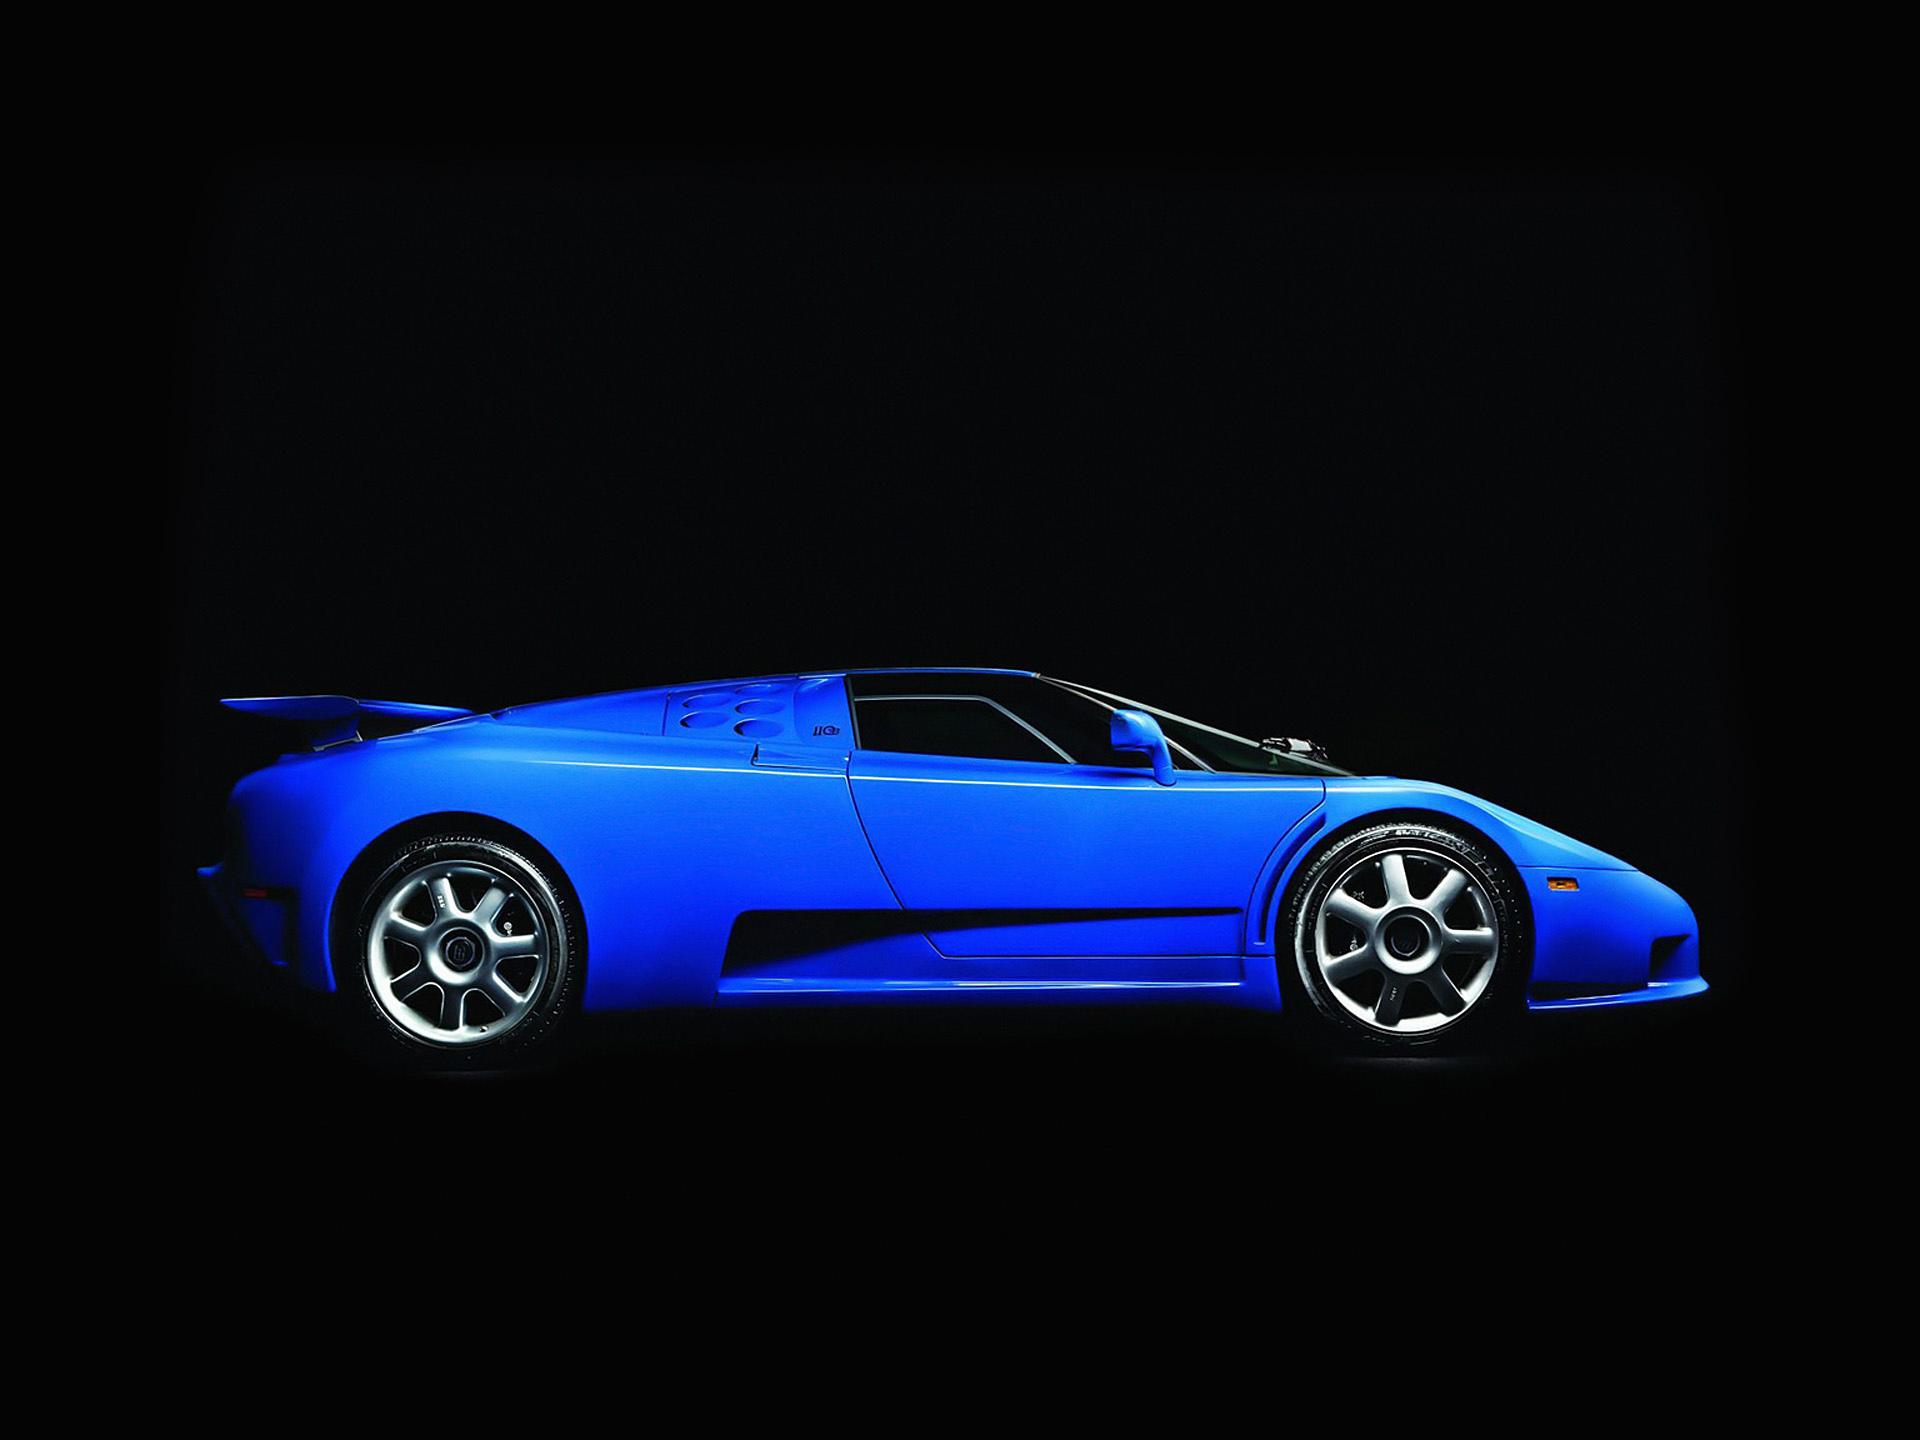 Bugatti EB110 GT at 1024 x 768 size wallpapers HD quality